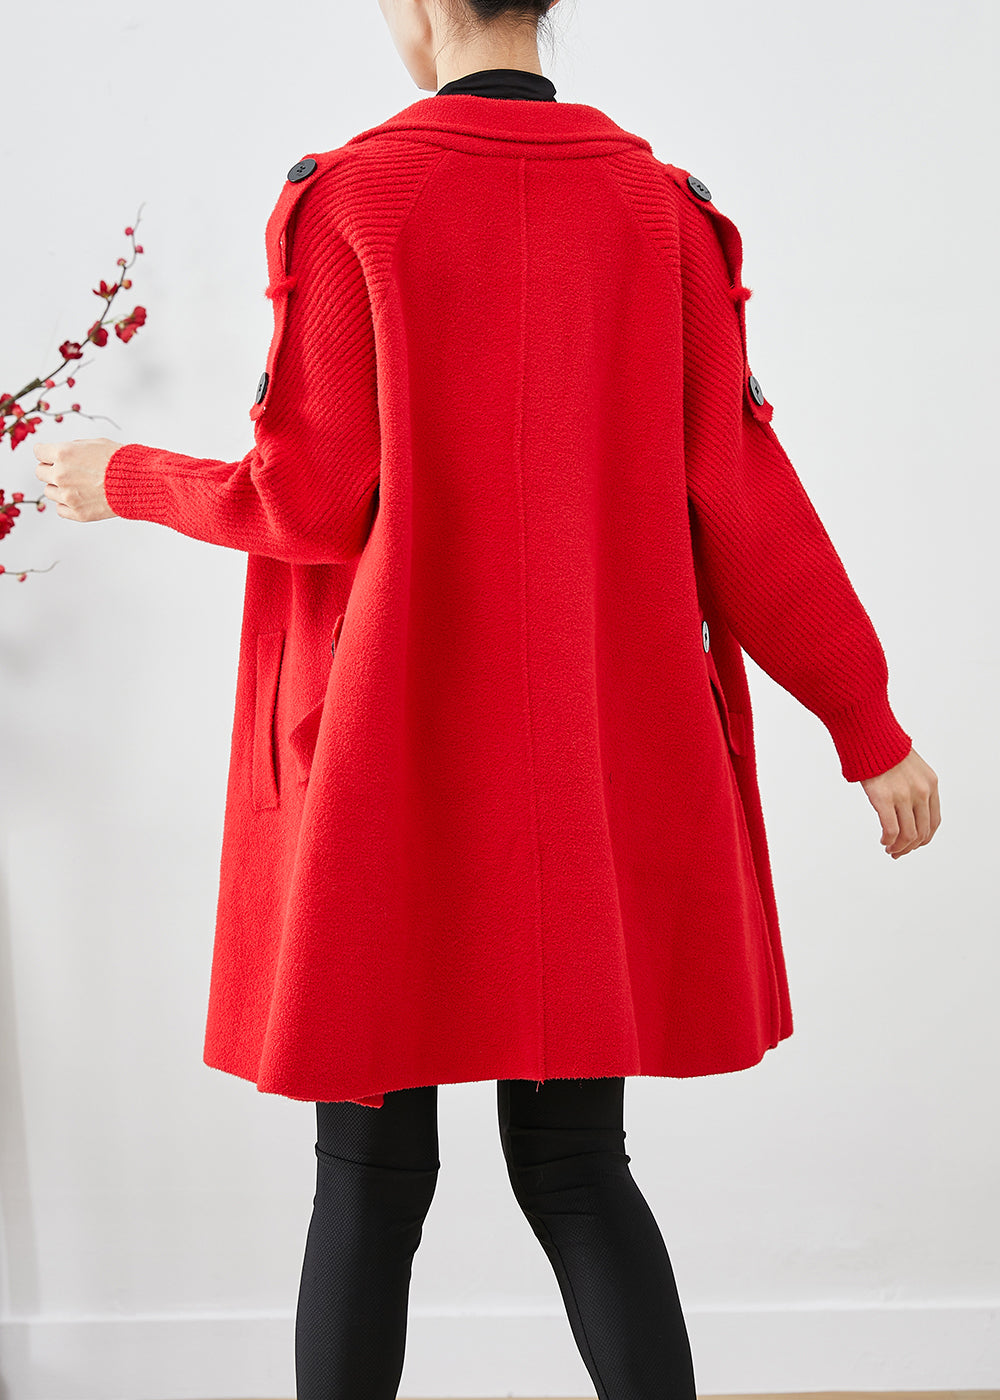 Women Red Oversized Knit Patchwork Woolen Coat Fall